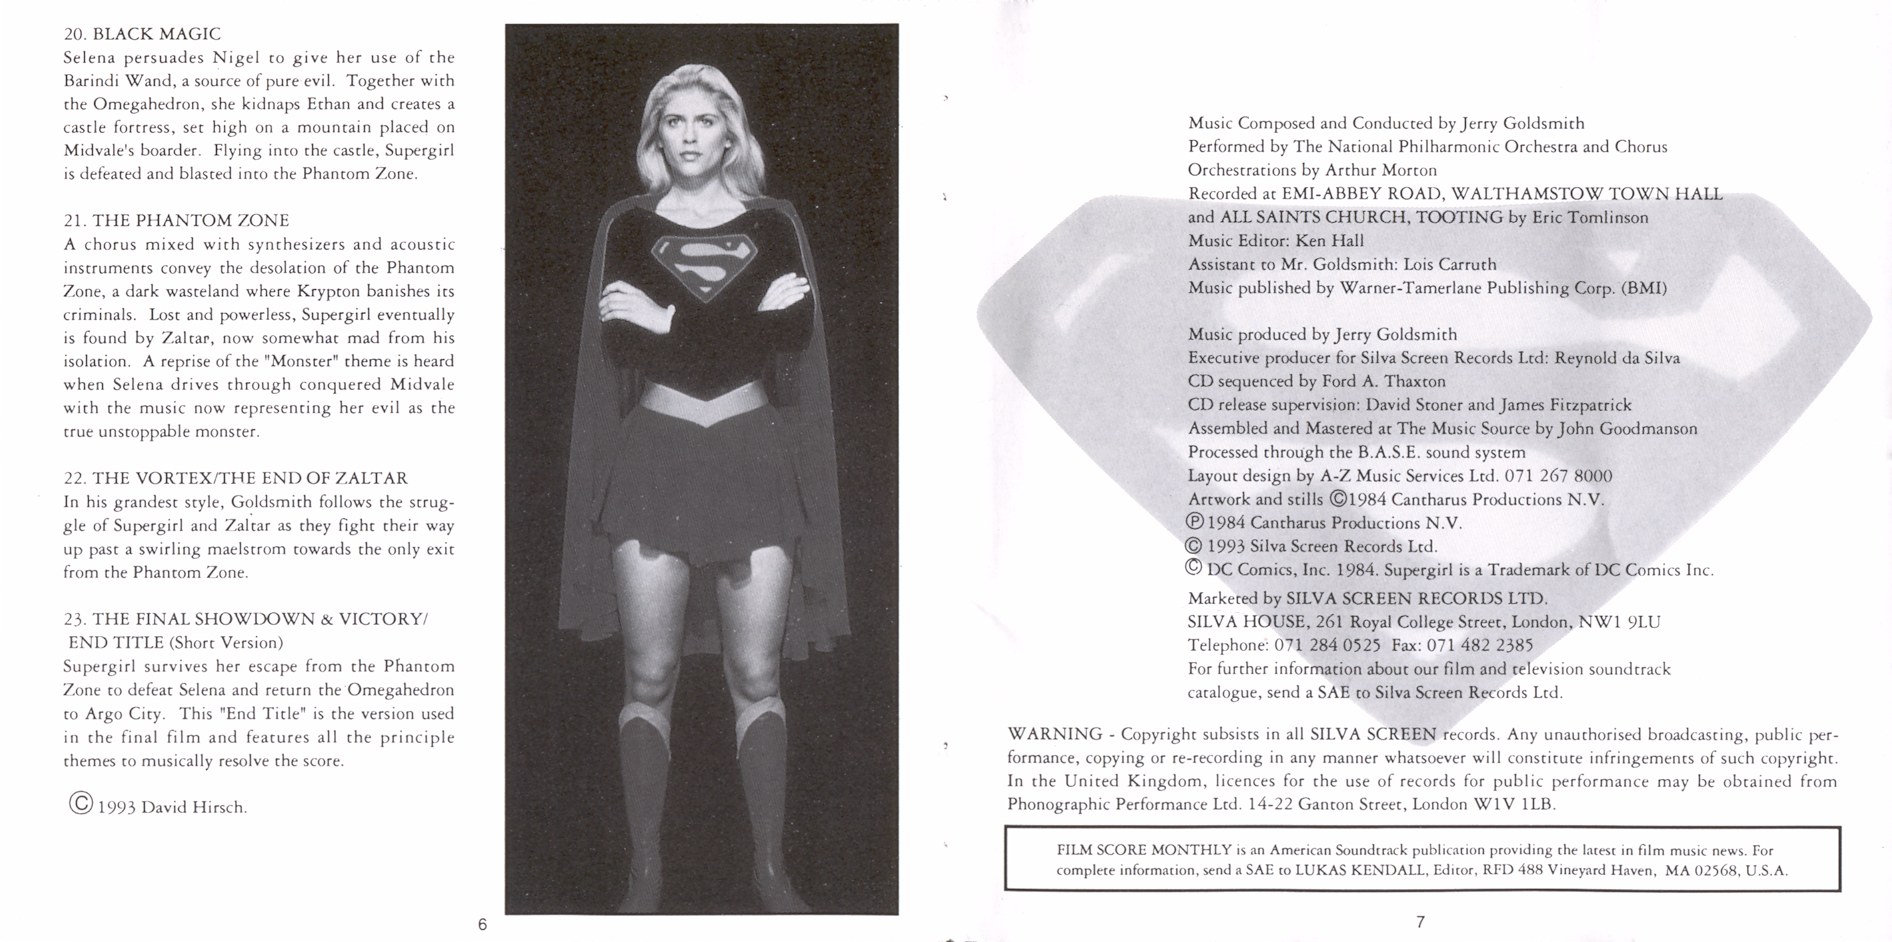 SUPERGIRL Original Motion Picture Soundtrack – Supergirl: Maid of